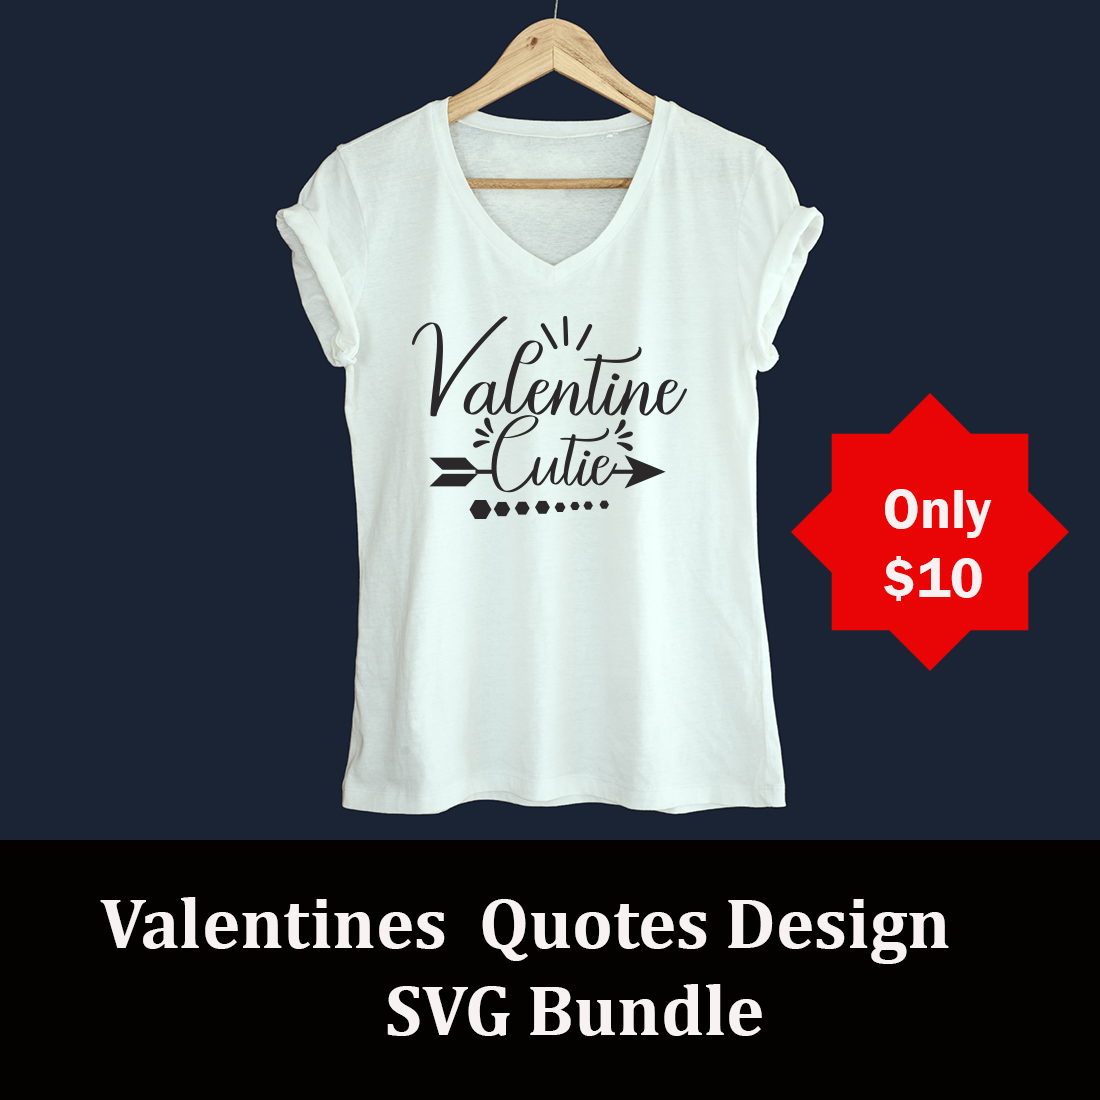 Valentines Quotes Design SVG Bundle cover image.